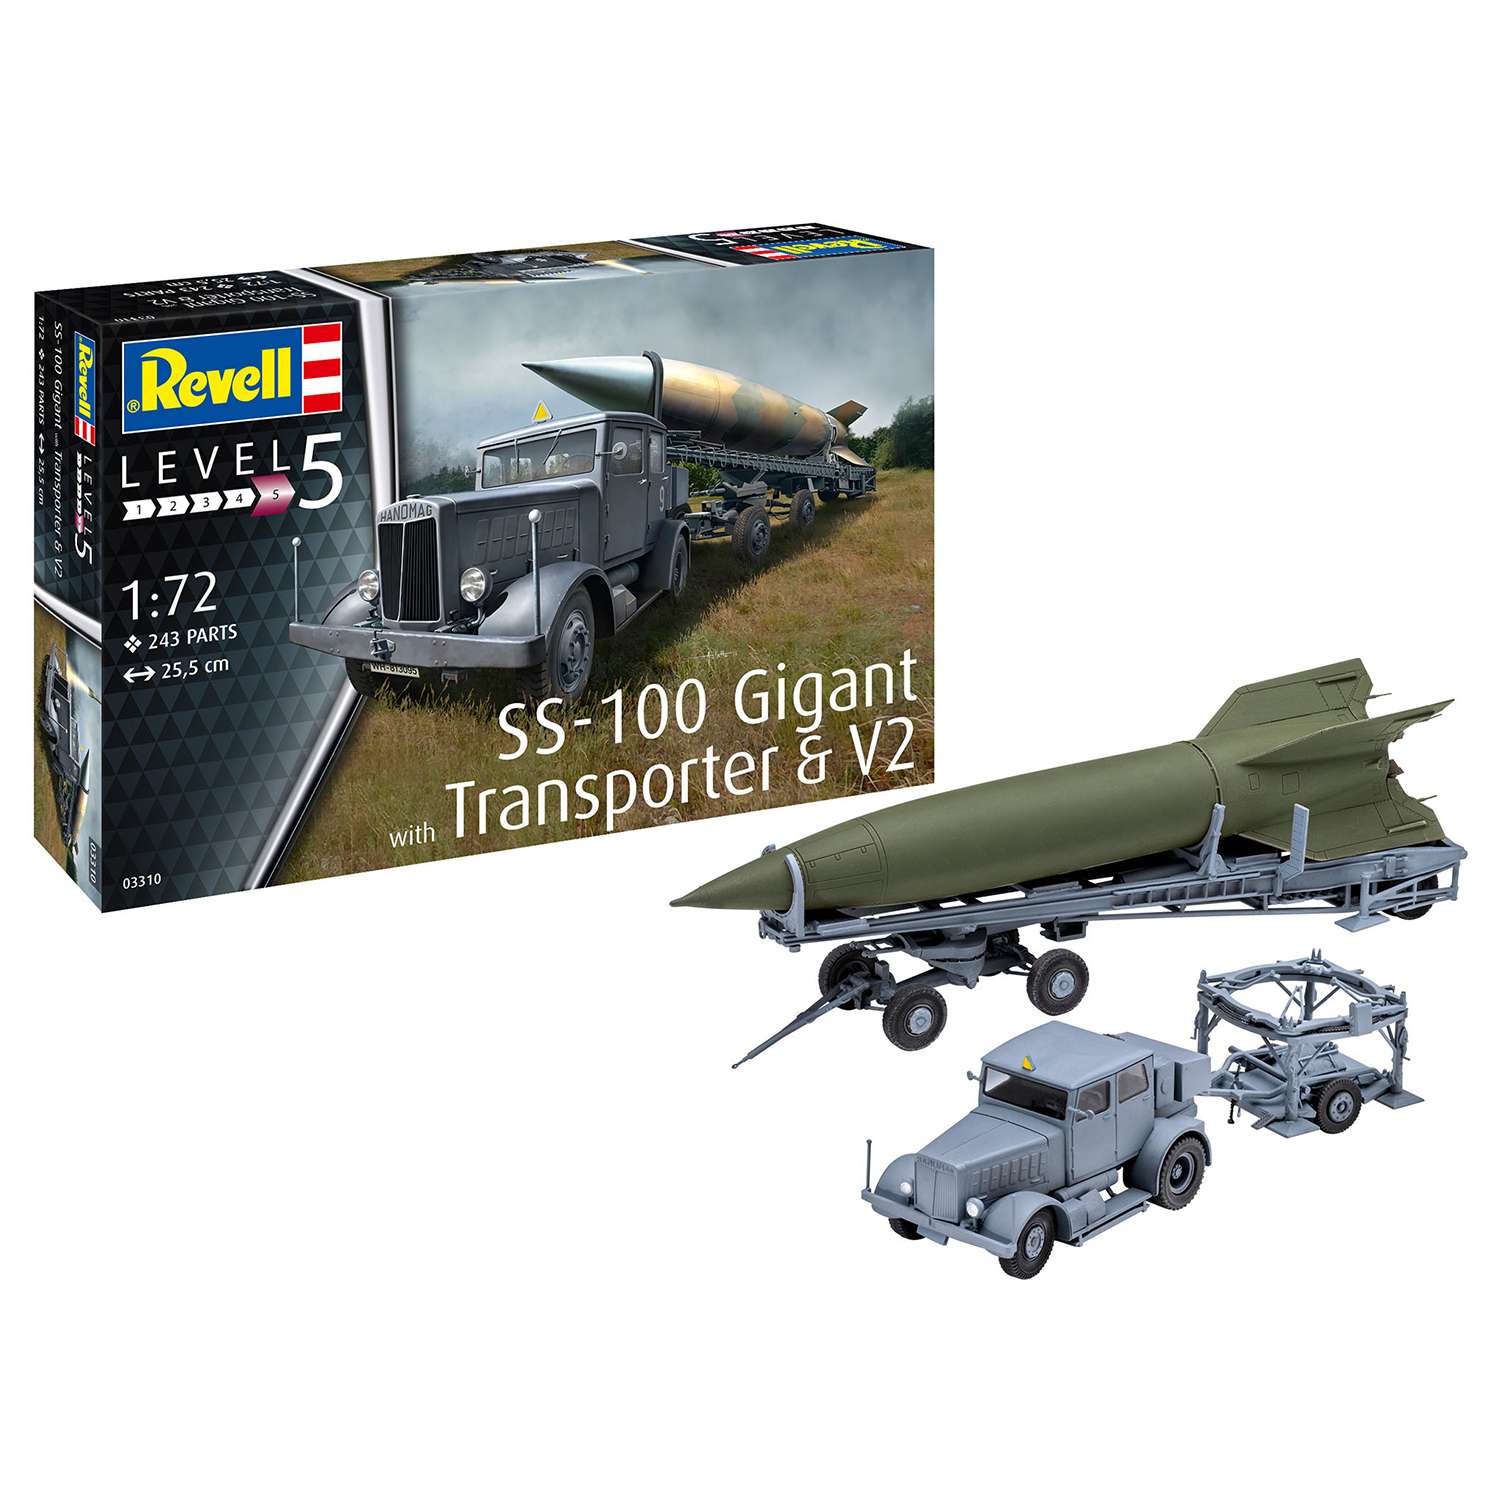 Набор Revell Военная техника SS-100 Gigant + Transporter + V2 03310 - фото 2